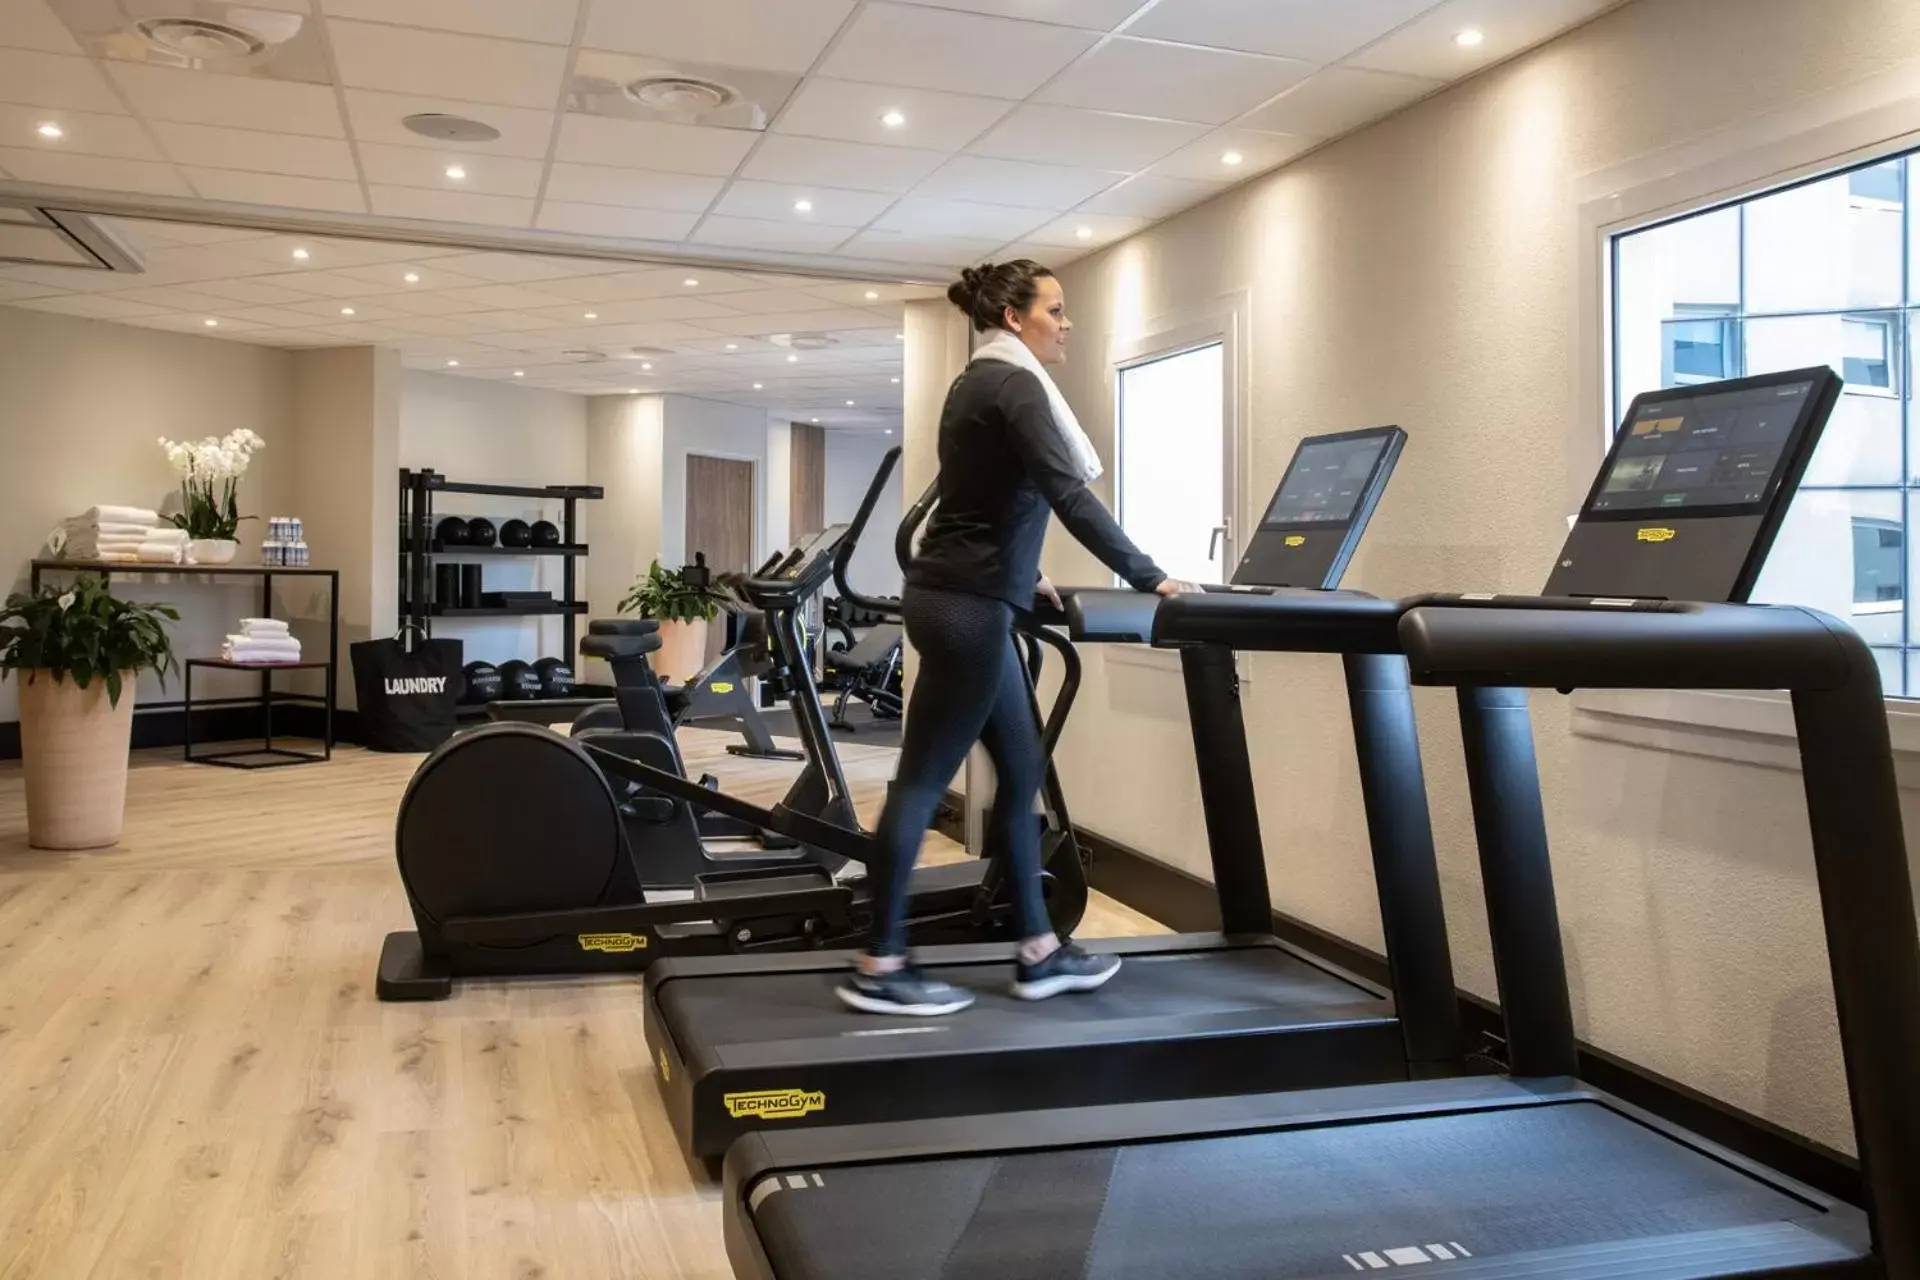 Fitness centre/facilities, Fitness Center/Facilities in Novotel Nice Arenas Aeroport